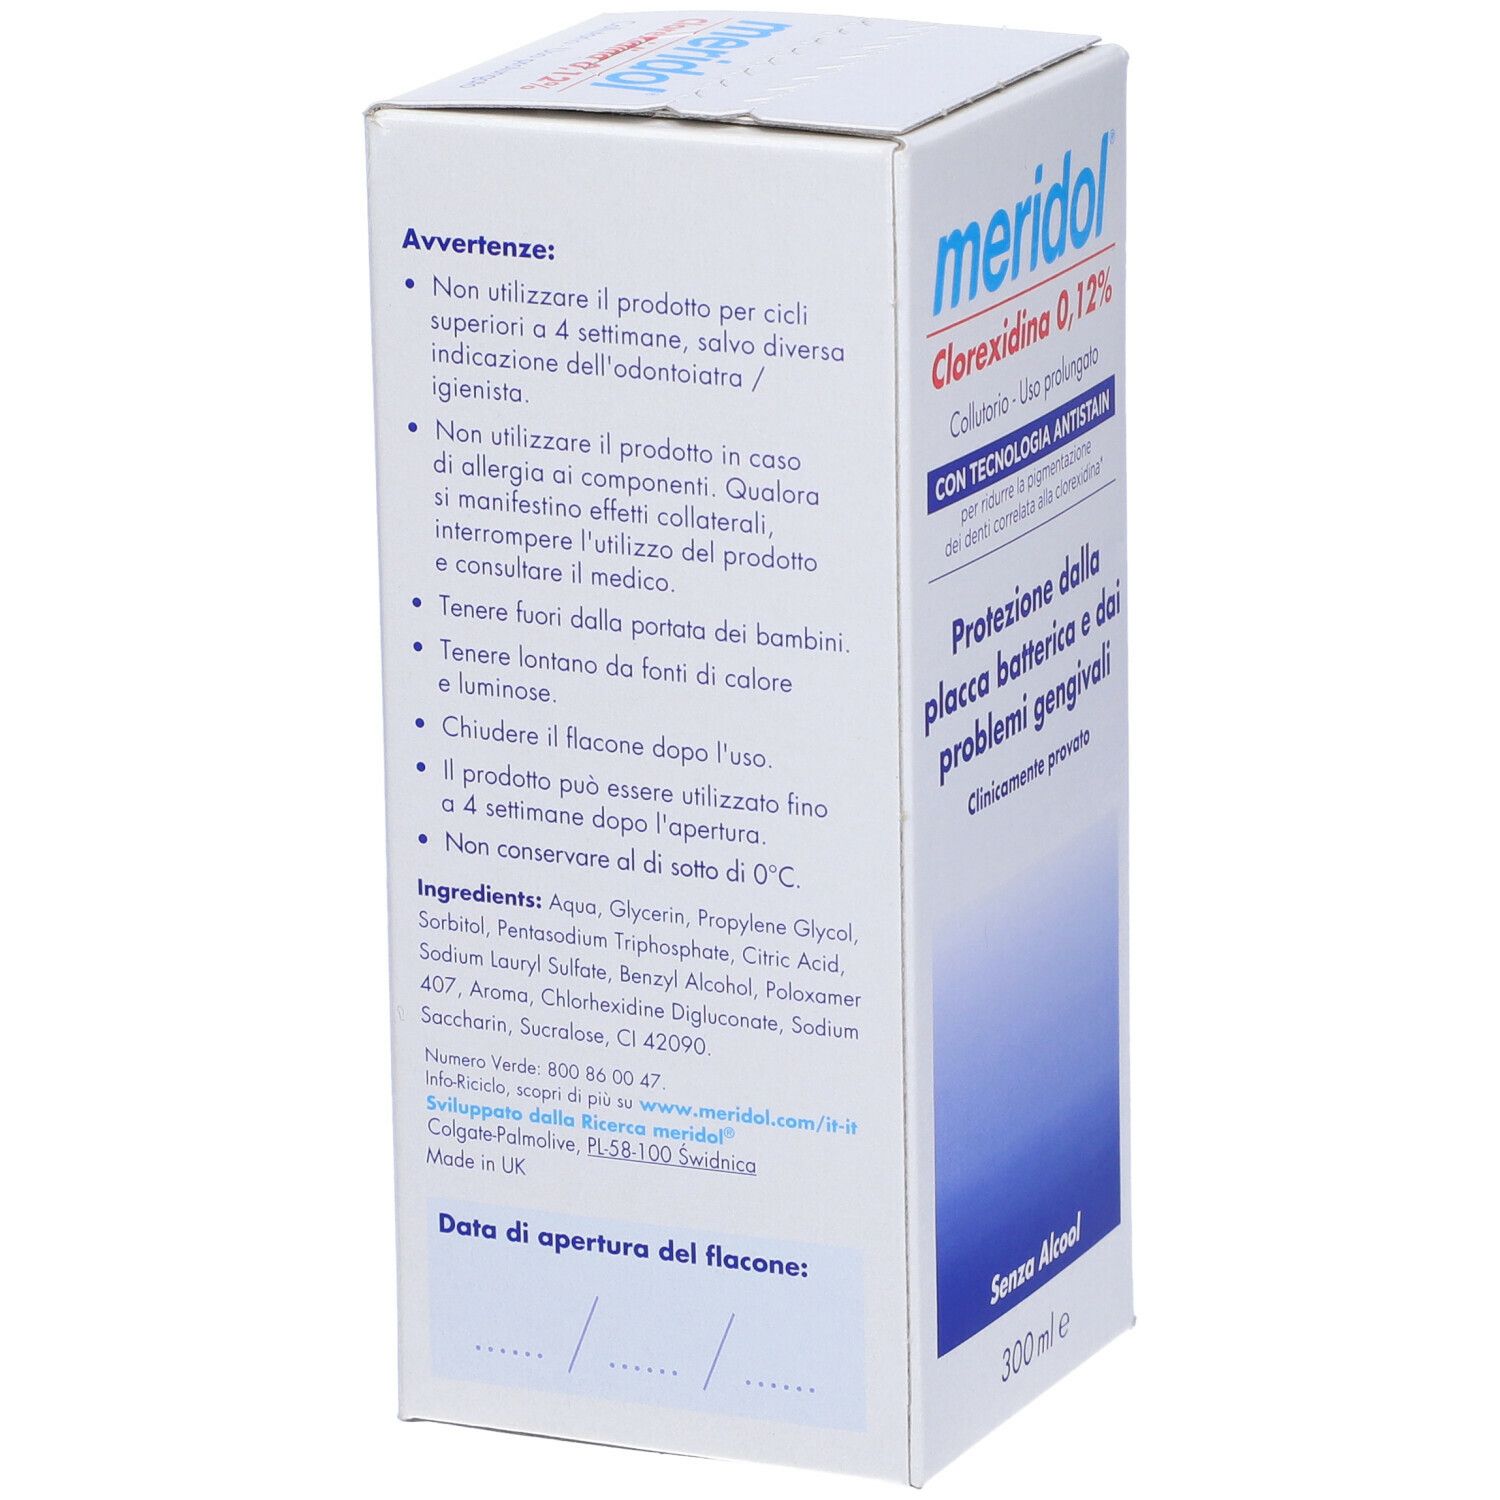 Meridol® Clorexidina 0,12%